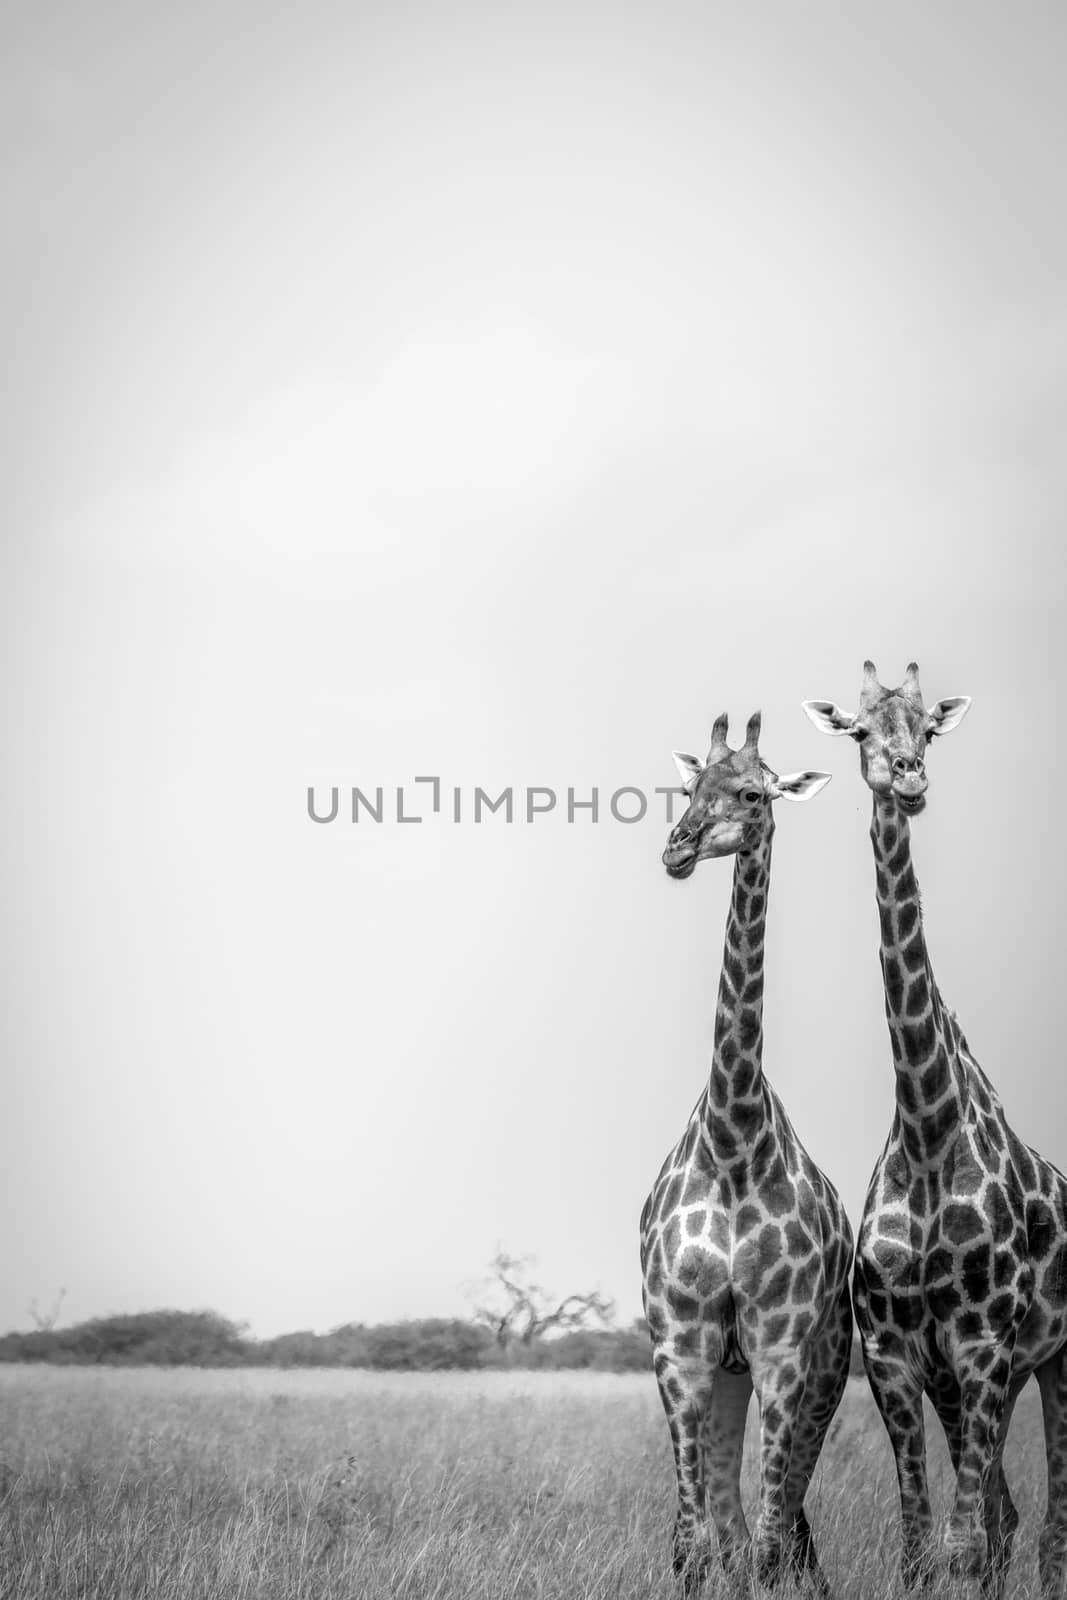 Two Giraffes standing in the grass in the Chobe National Park, Botswana.